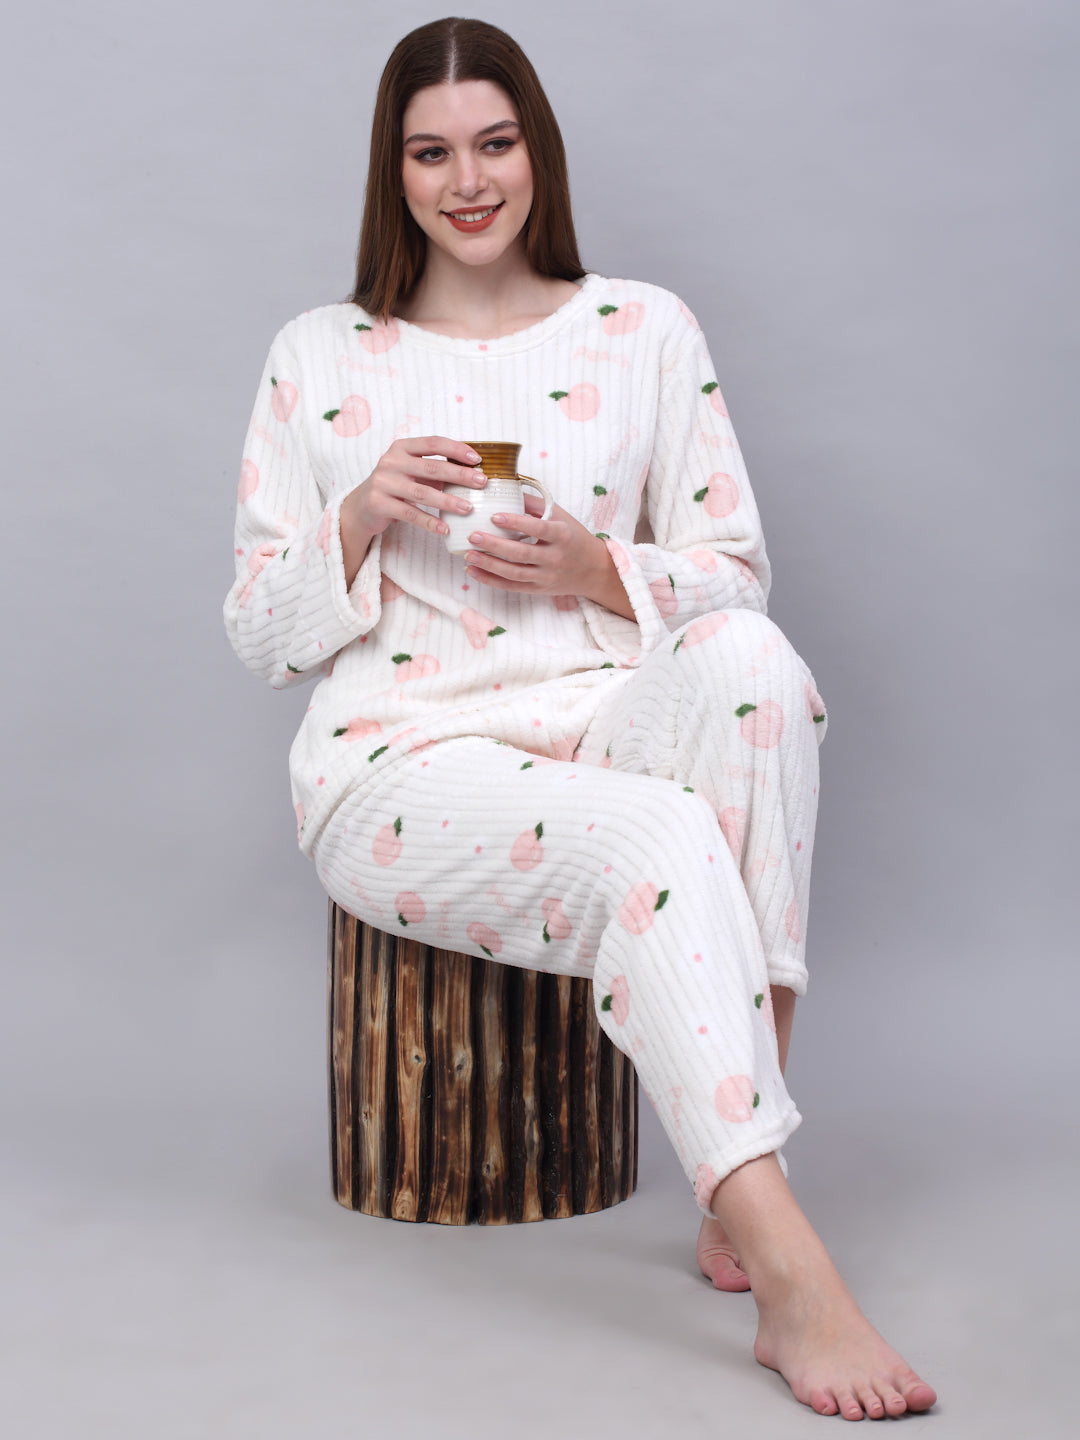 Buy Qlee Women Solid Shirt & Pyjama Set Night Suit For Night Wear